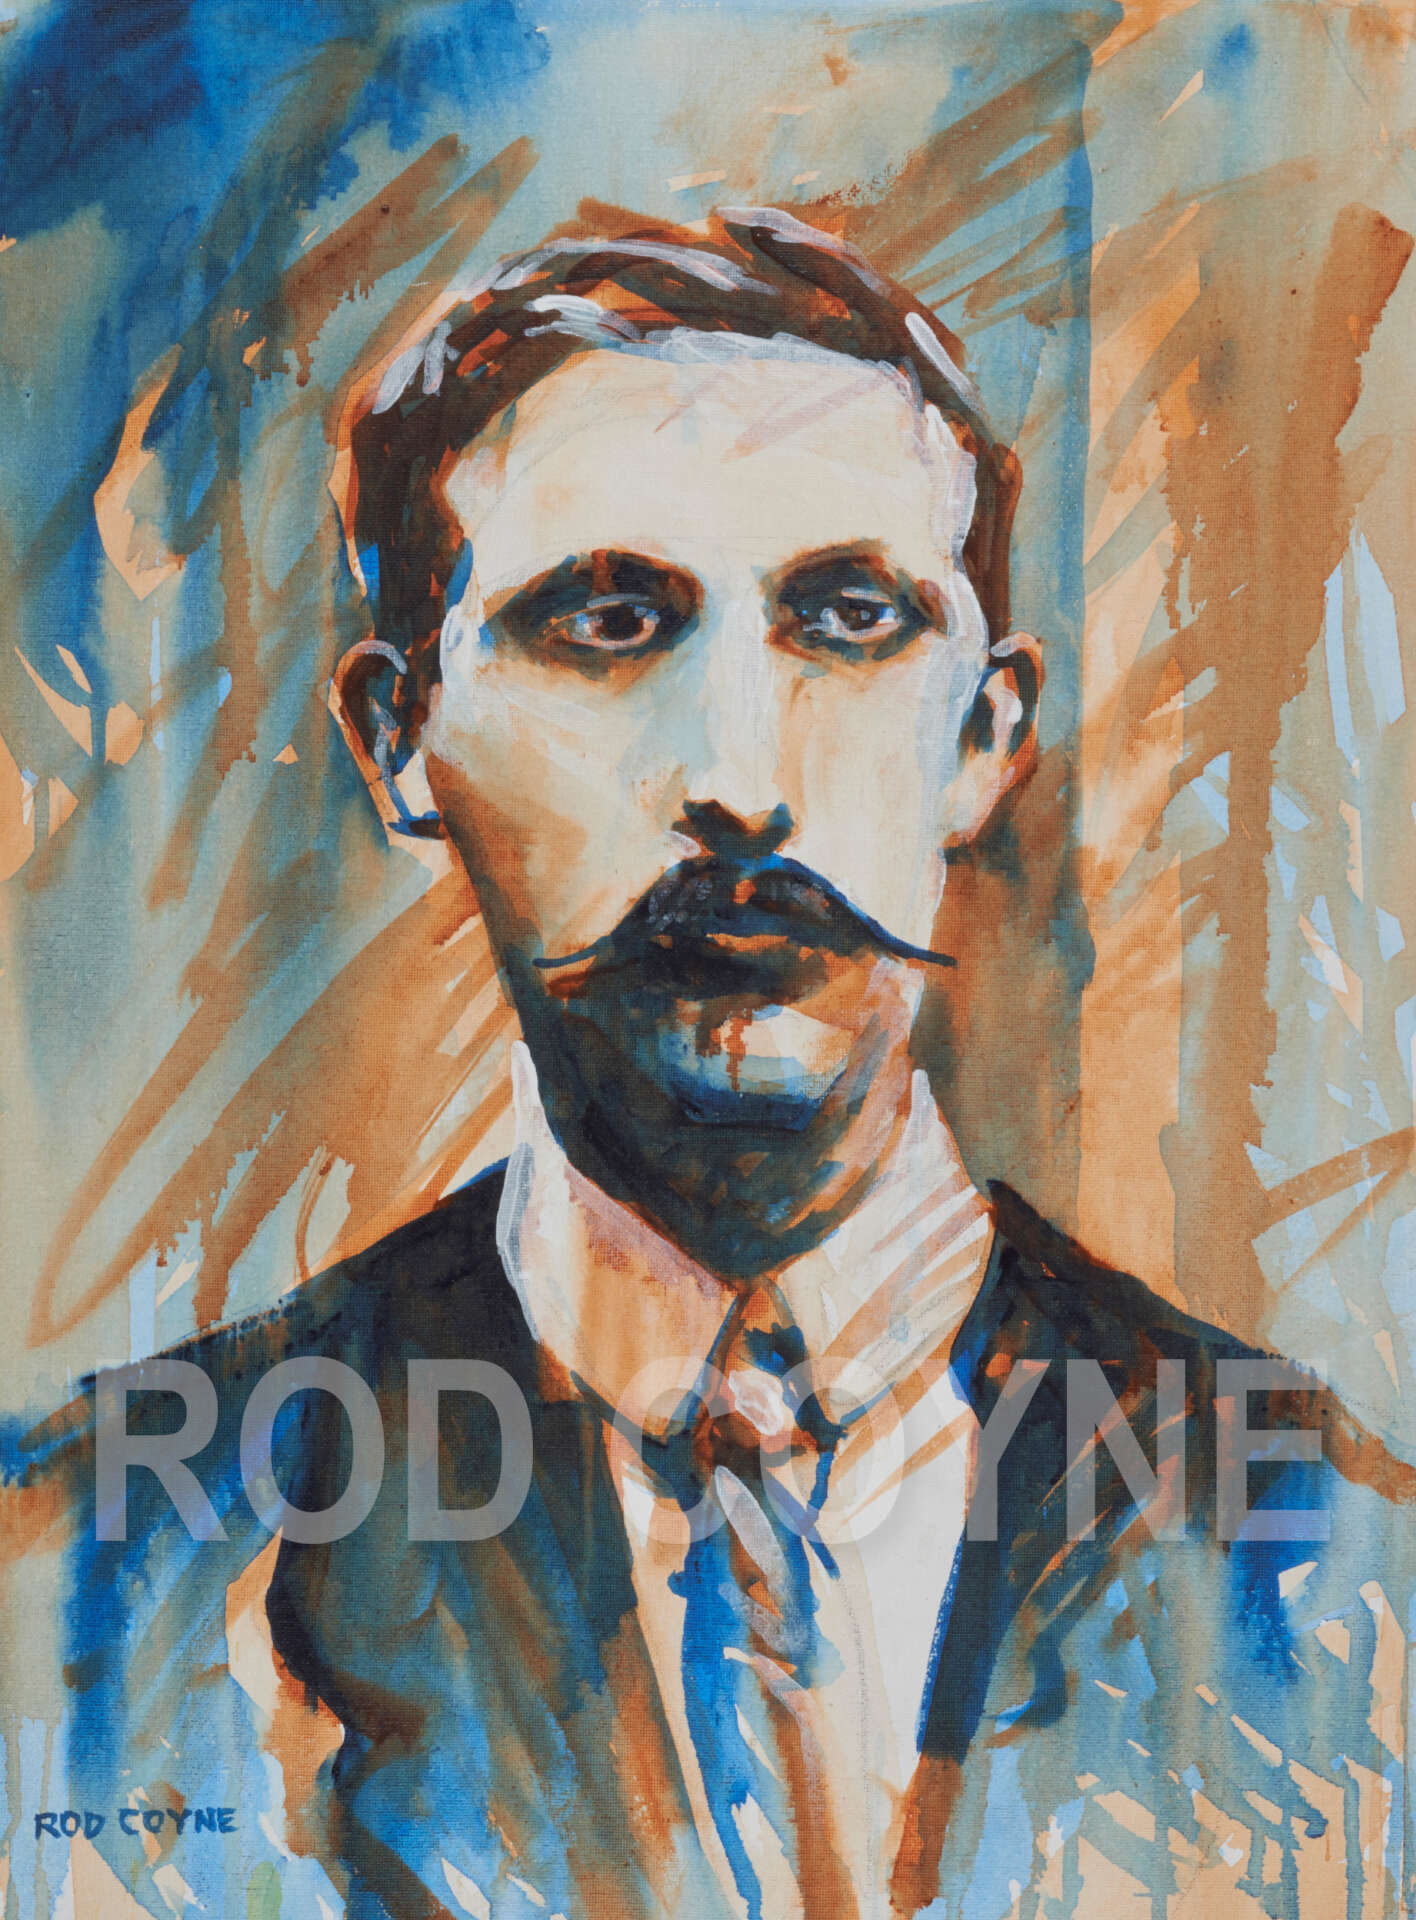 artist rod coyne's portrait "Éamonn Ceannt 1916" is shown here, watermarked.